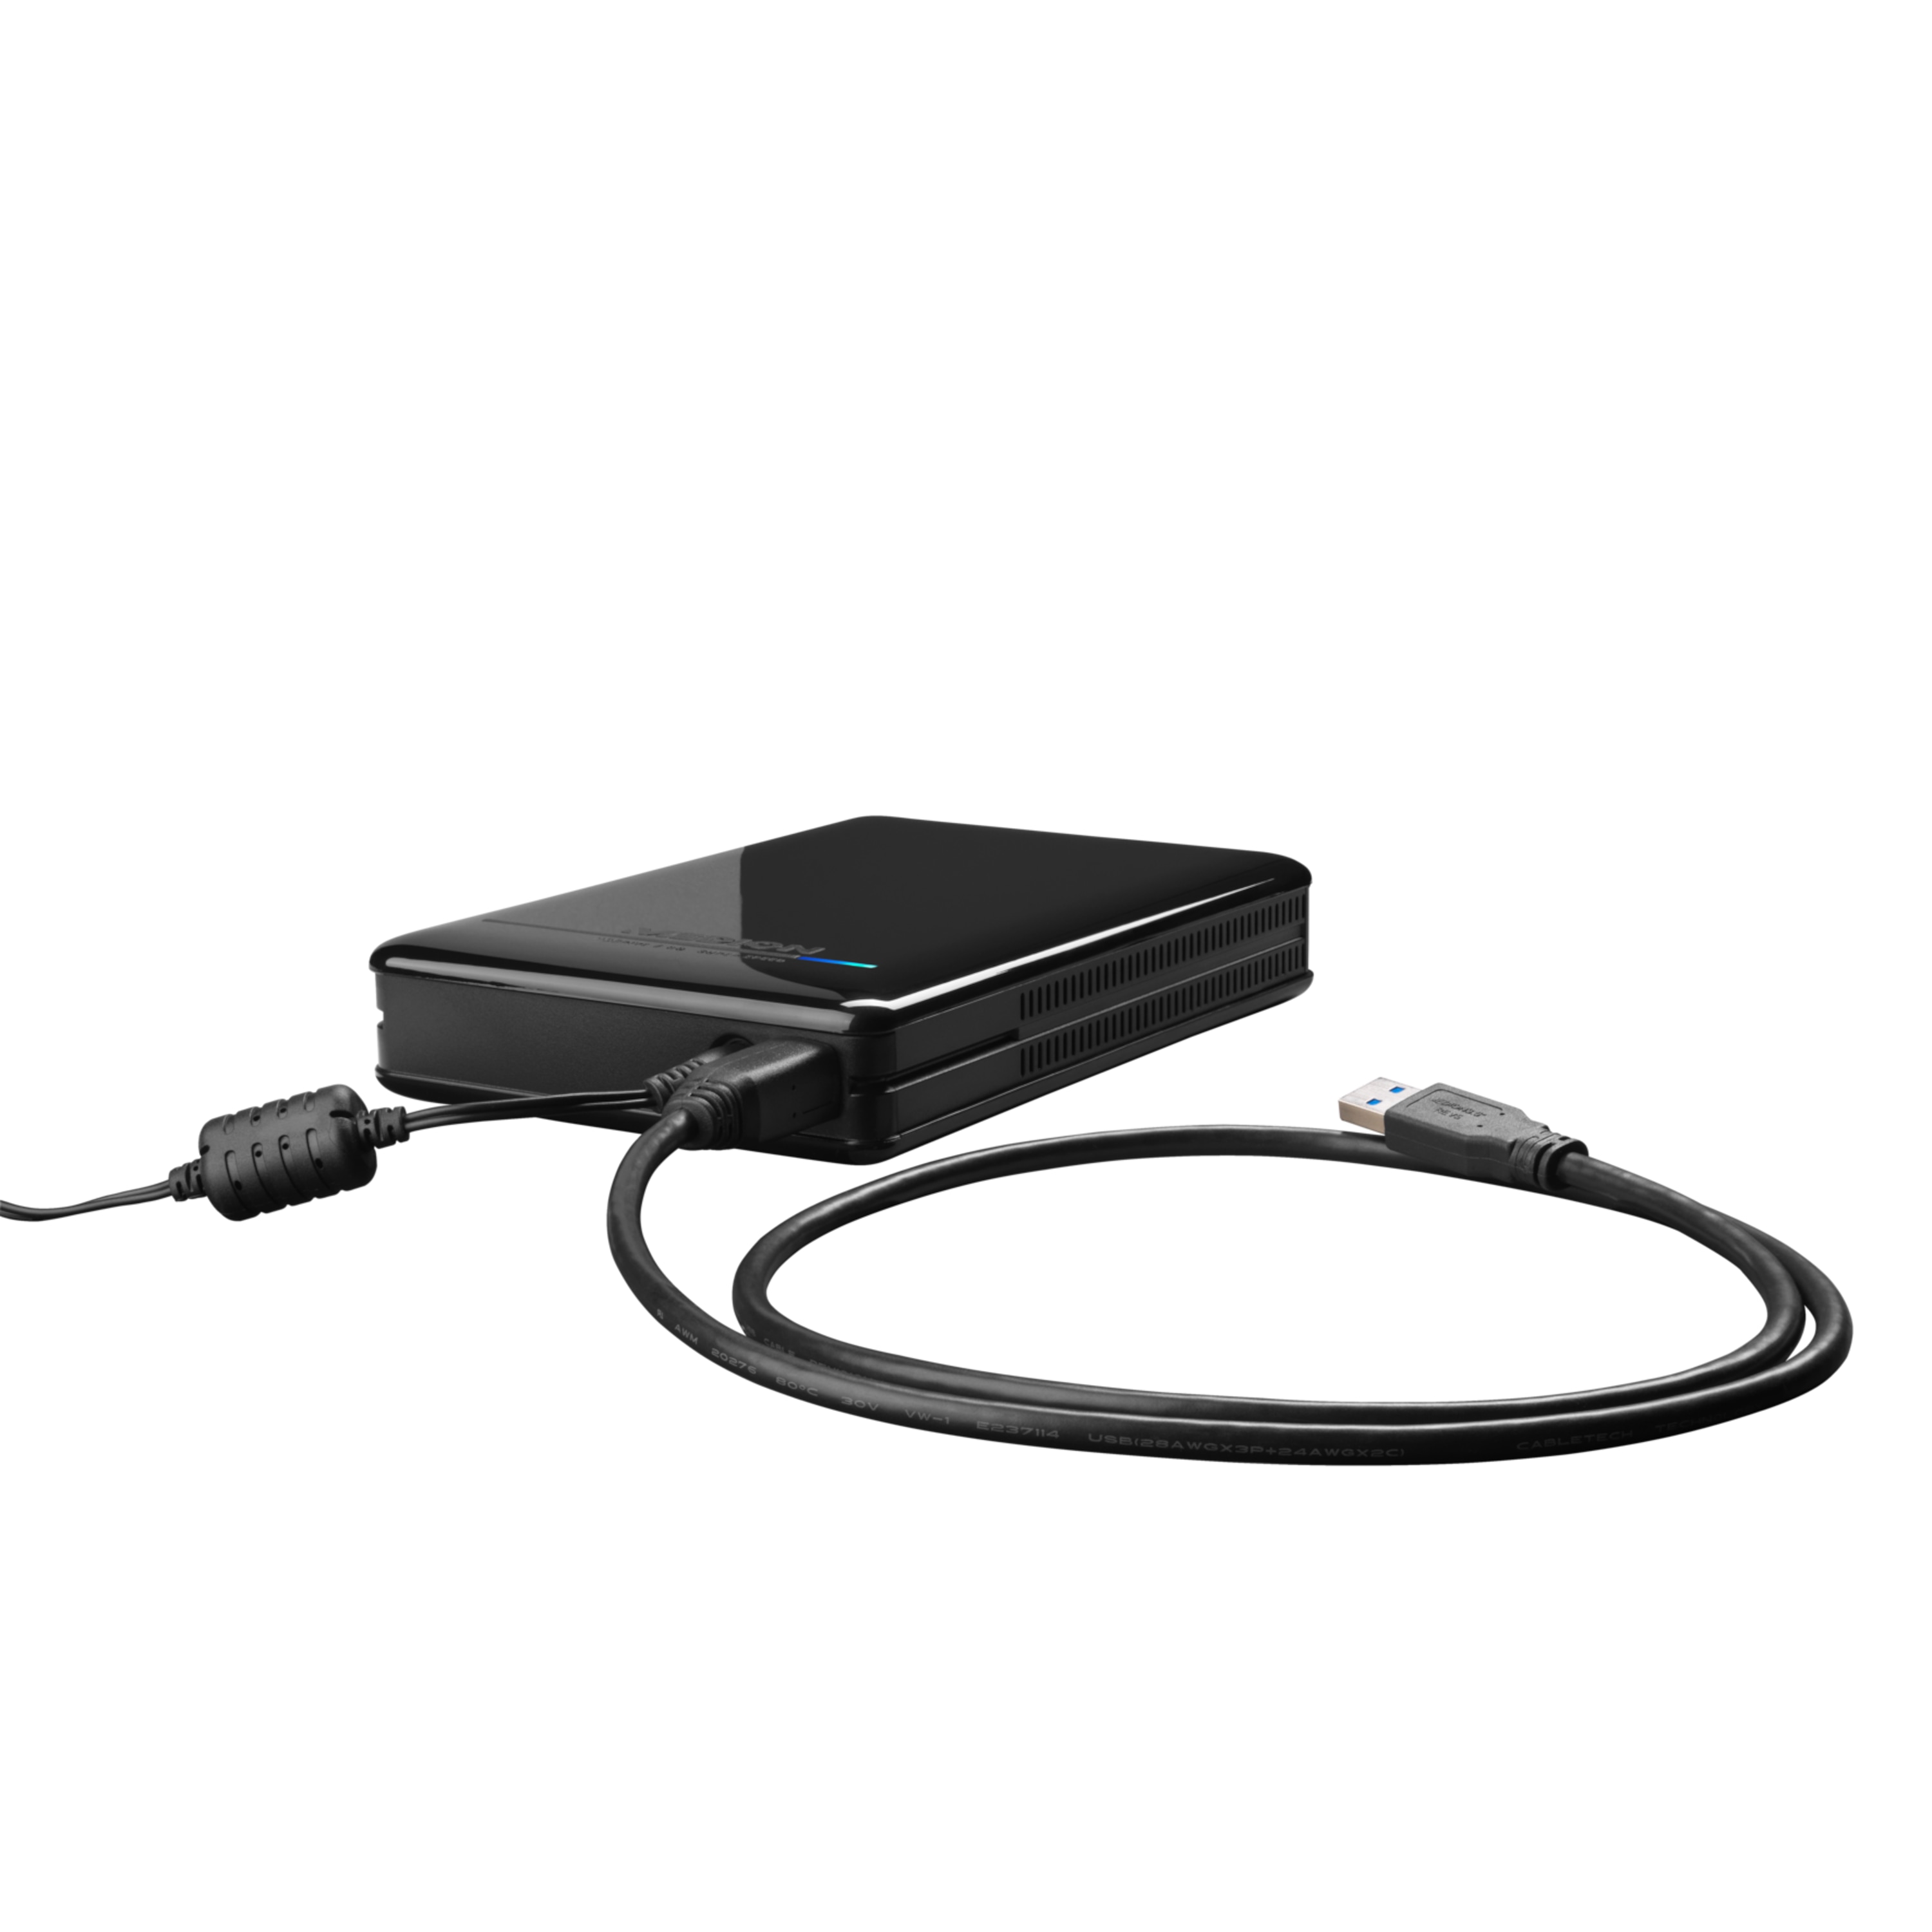 MEDION® P83777 HDDrive2Go, externe Festplatte, 1 TB Speicherkapazität, USB 3.0 & USB 2.0 kompatibel, universelles Speichermedium